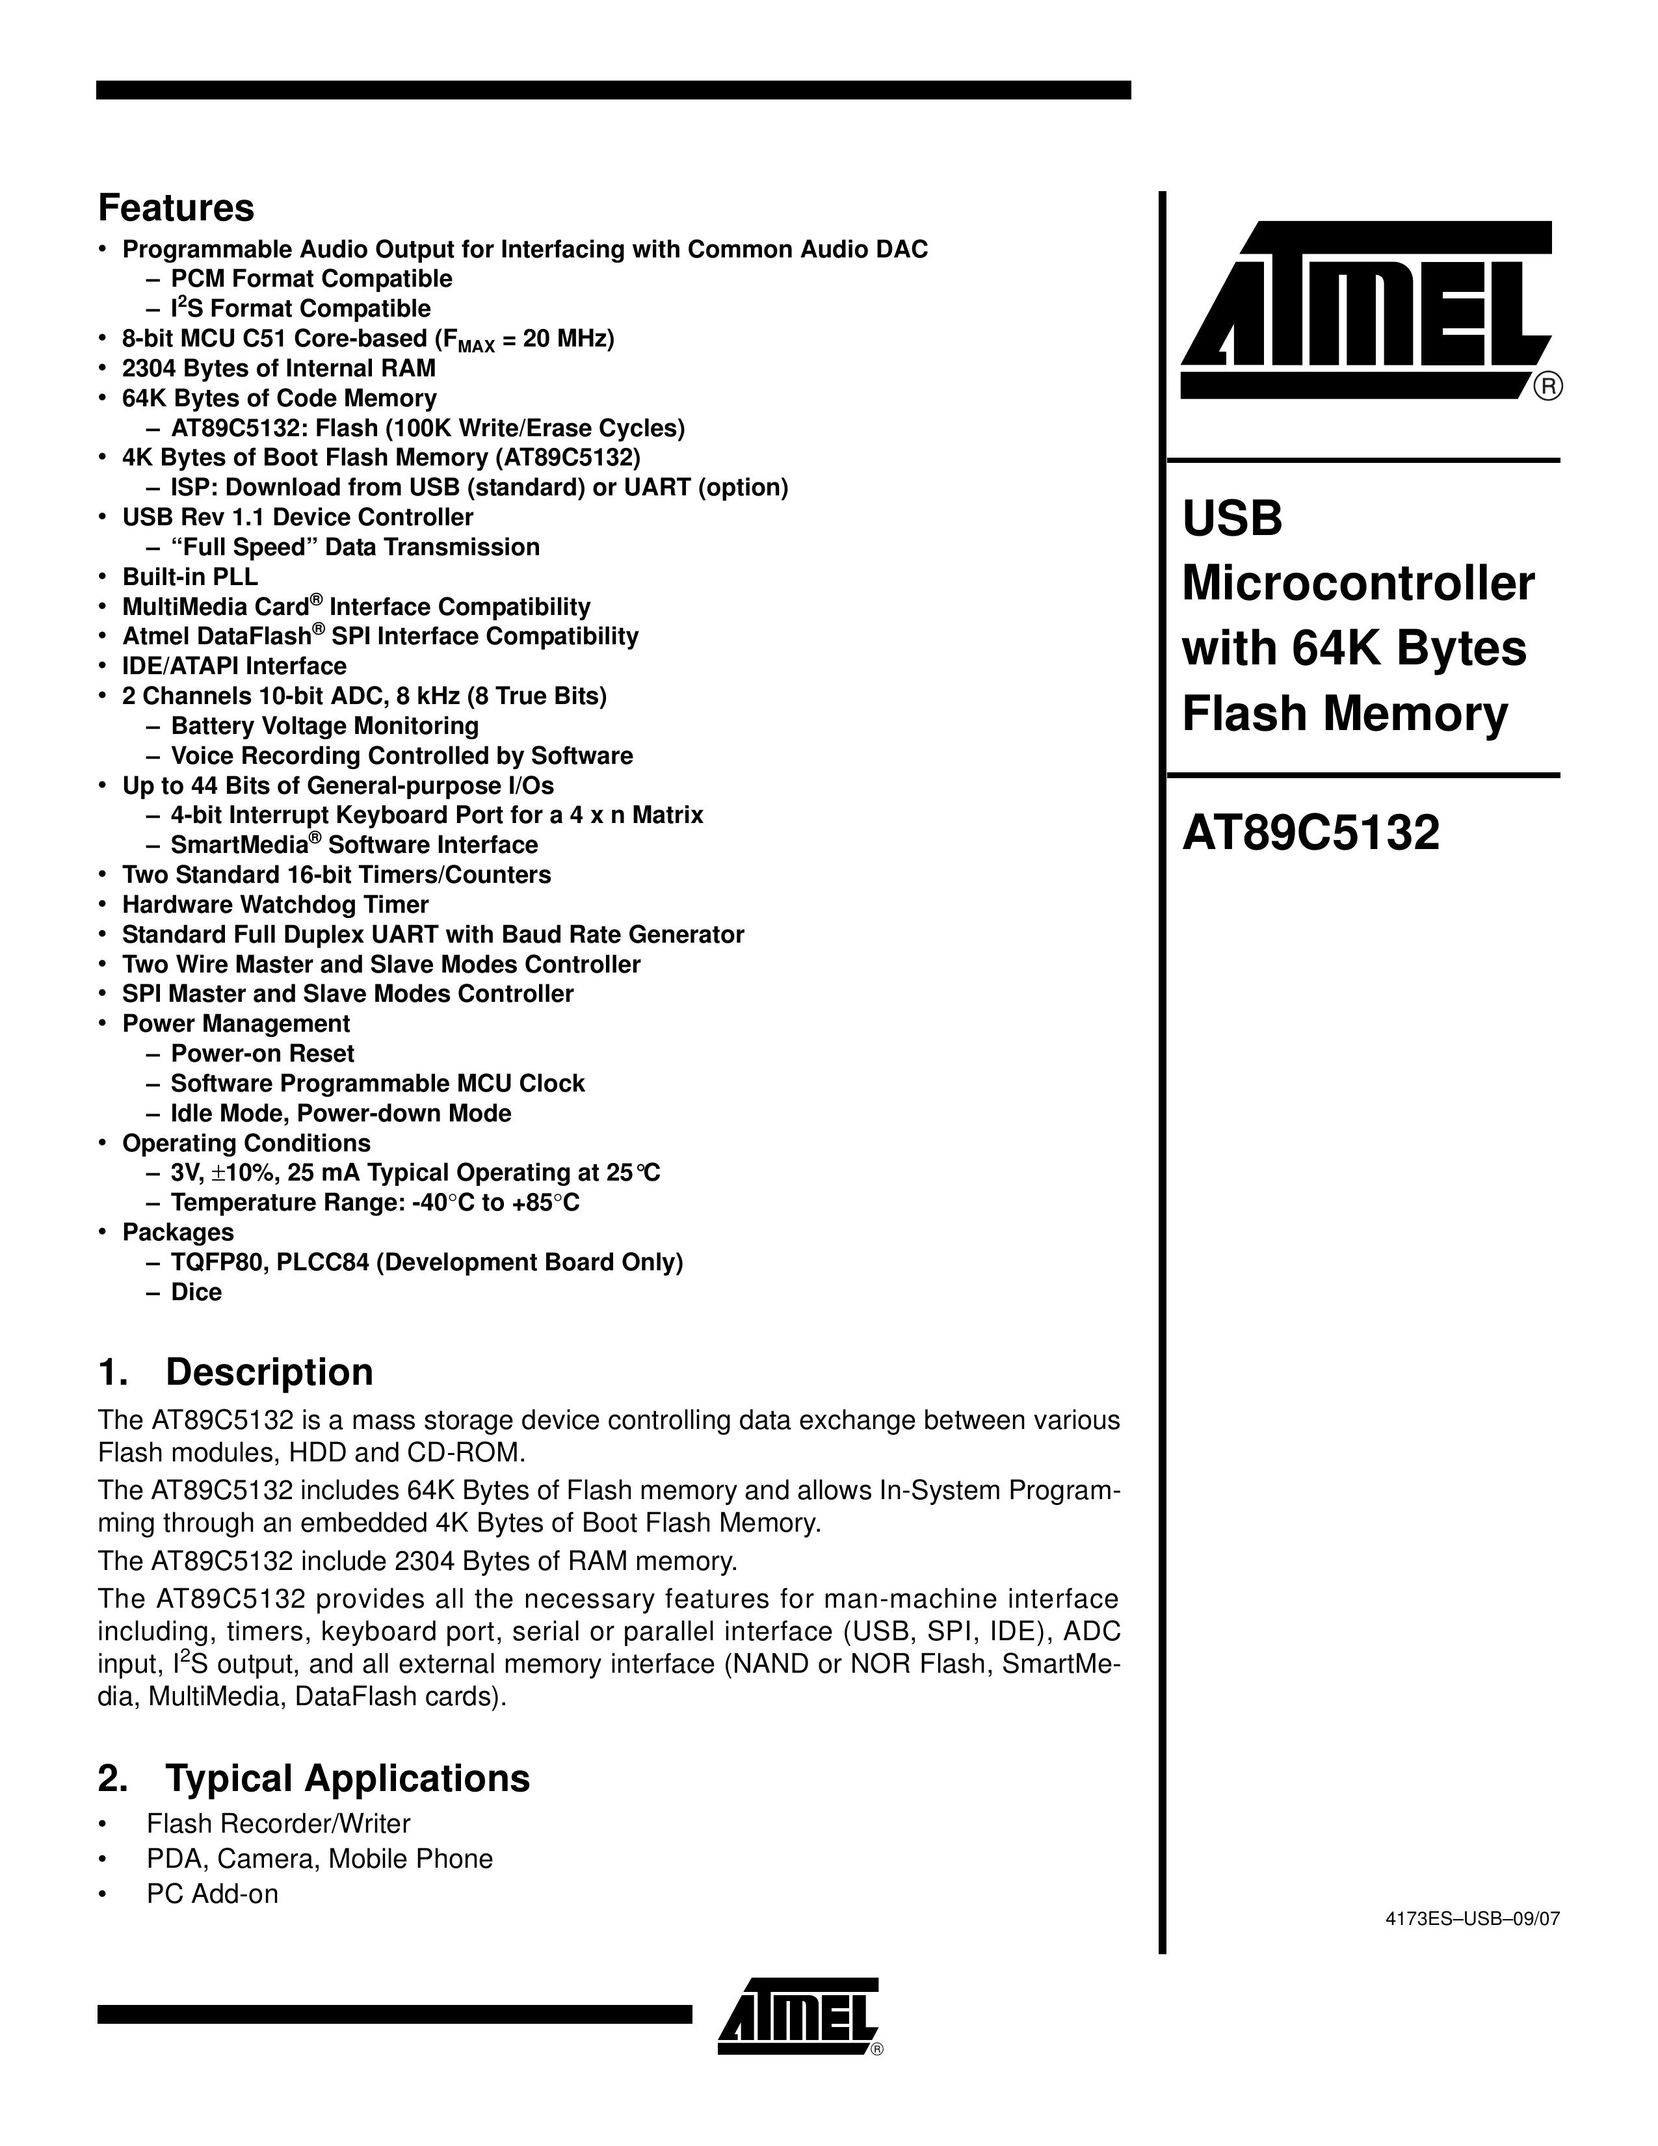 Atmel AT89C5132 Computer Hardware User Manual